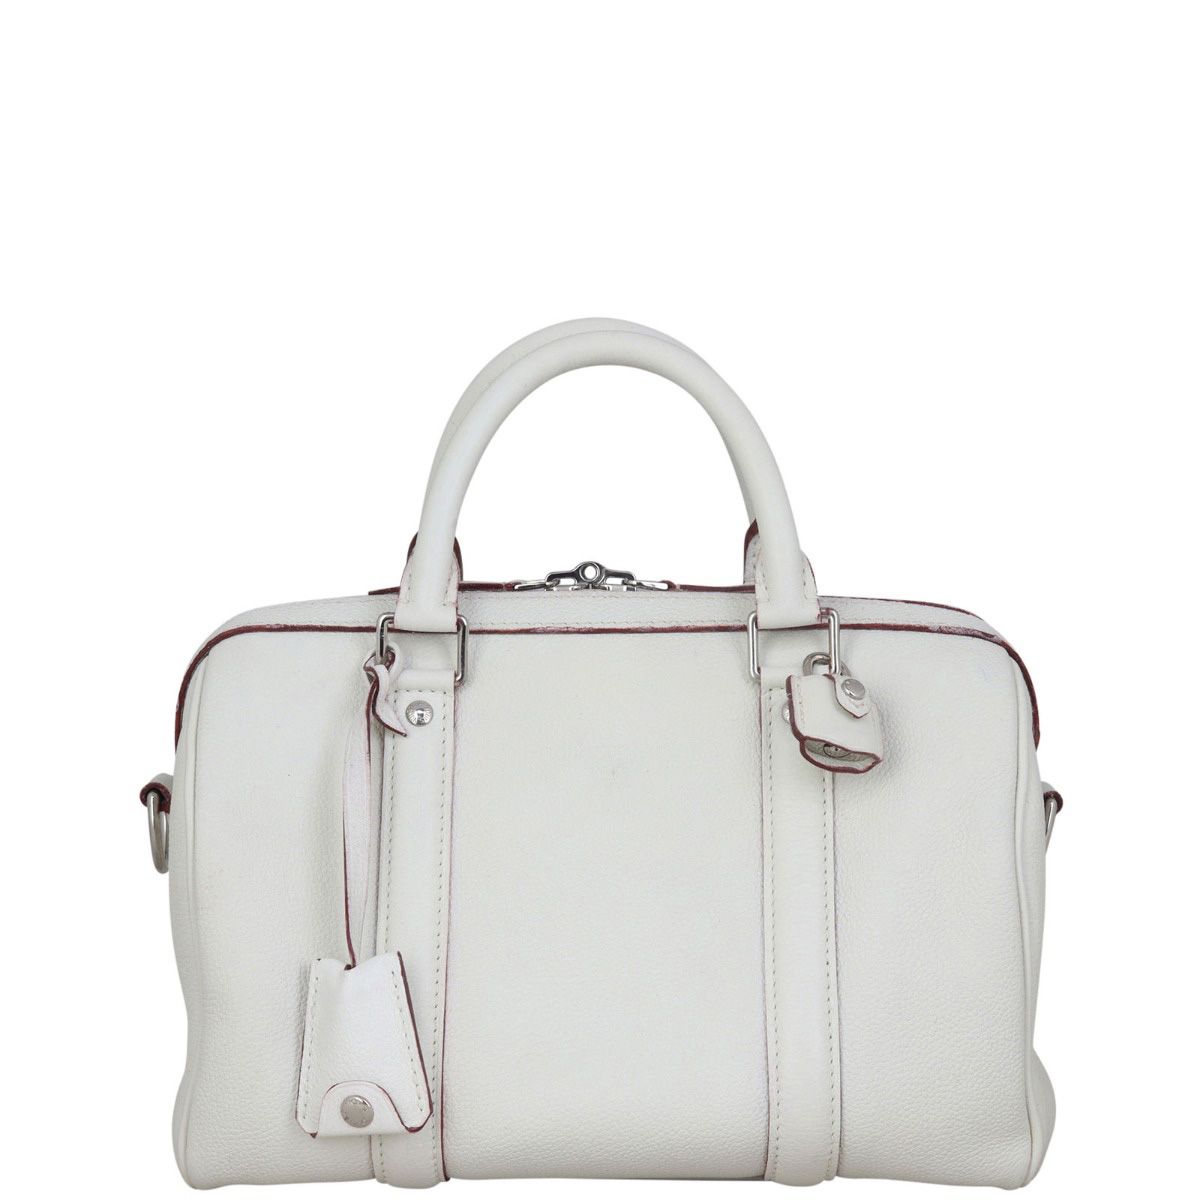 Louis Vuitton, Bags, Louis Vuitton Sofia Coppola Limited Edition White